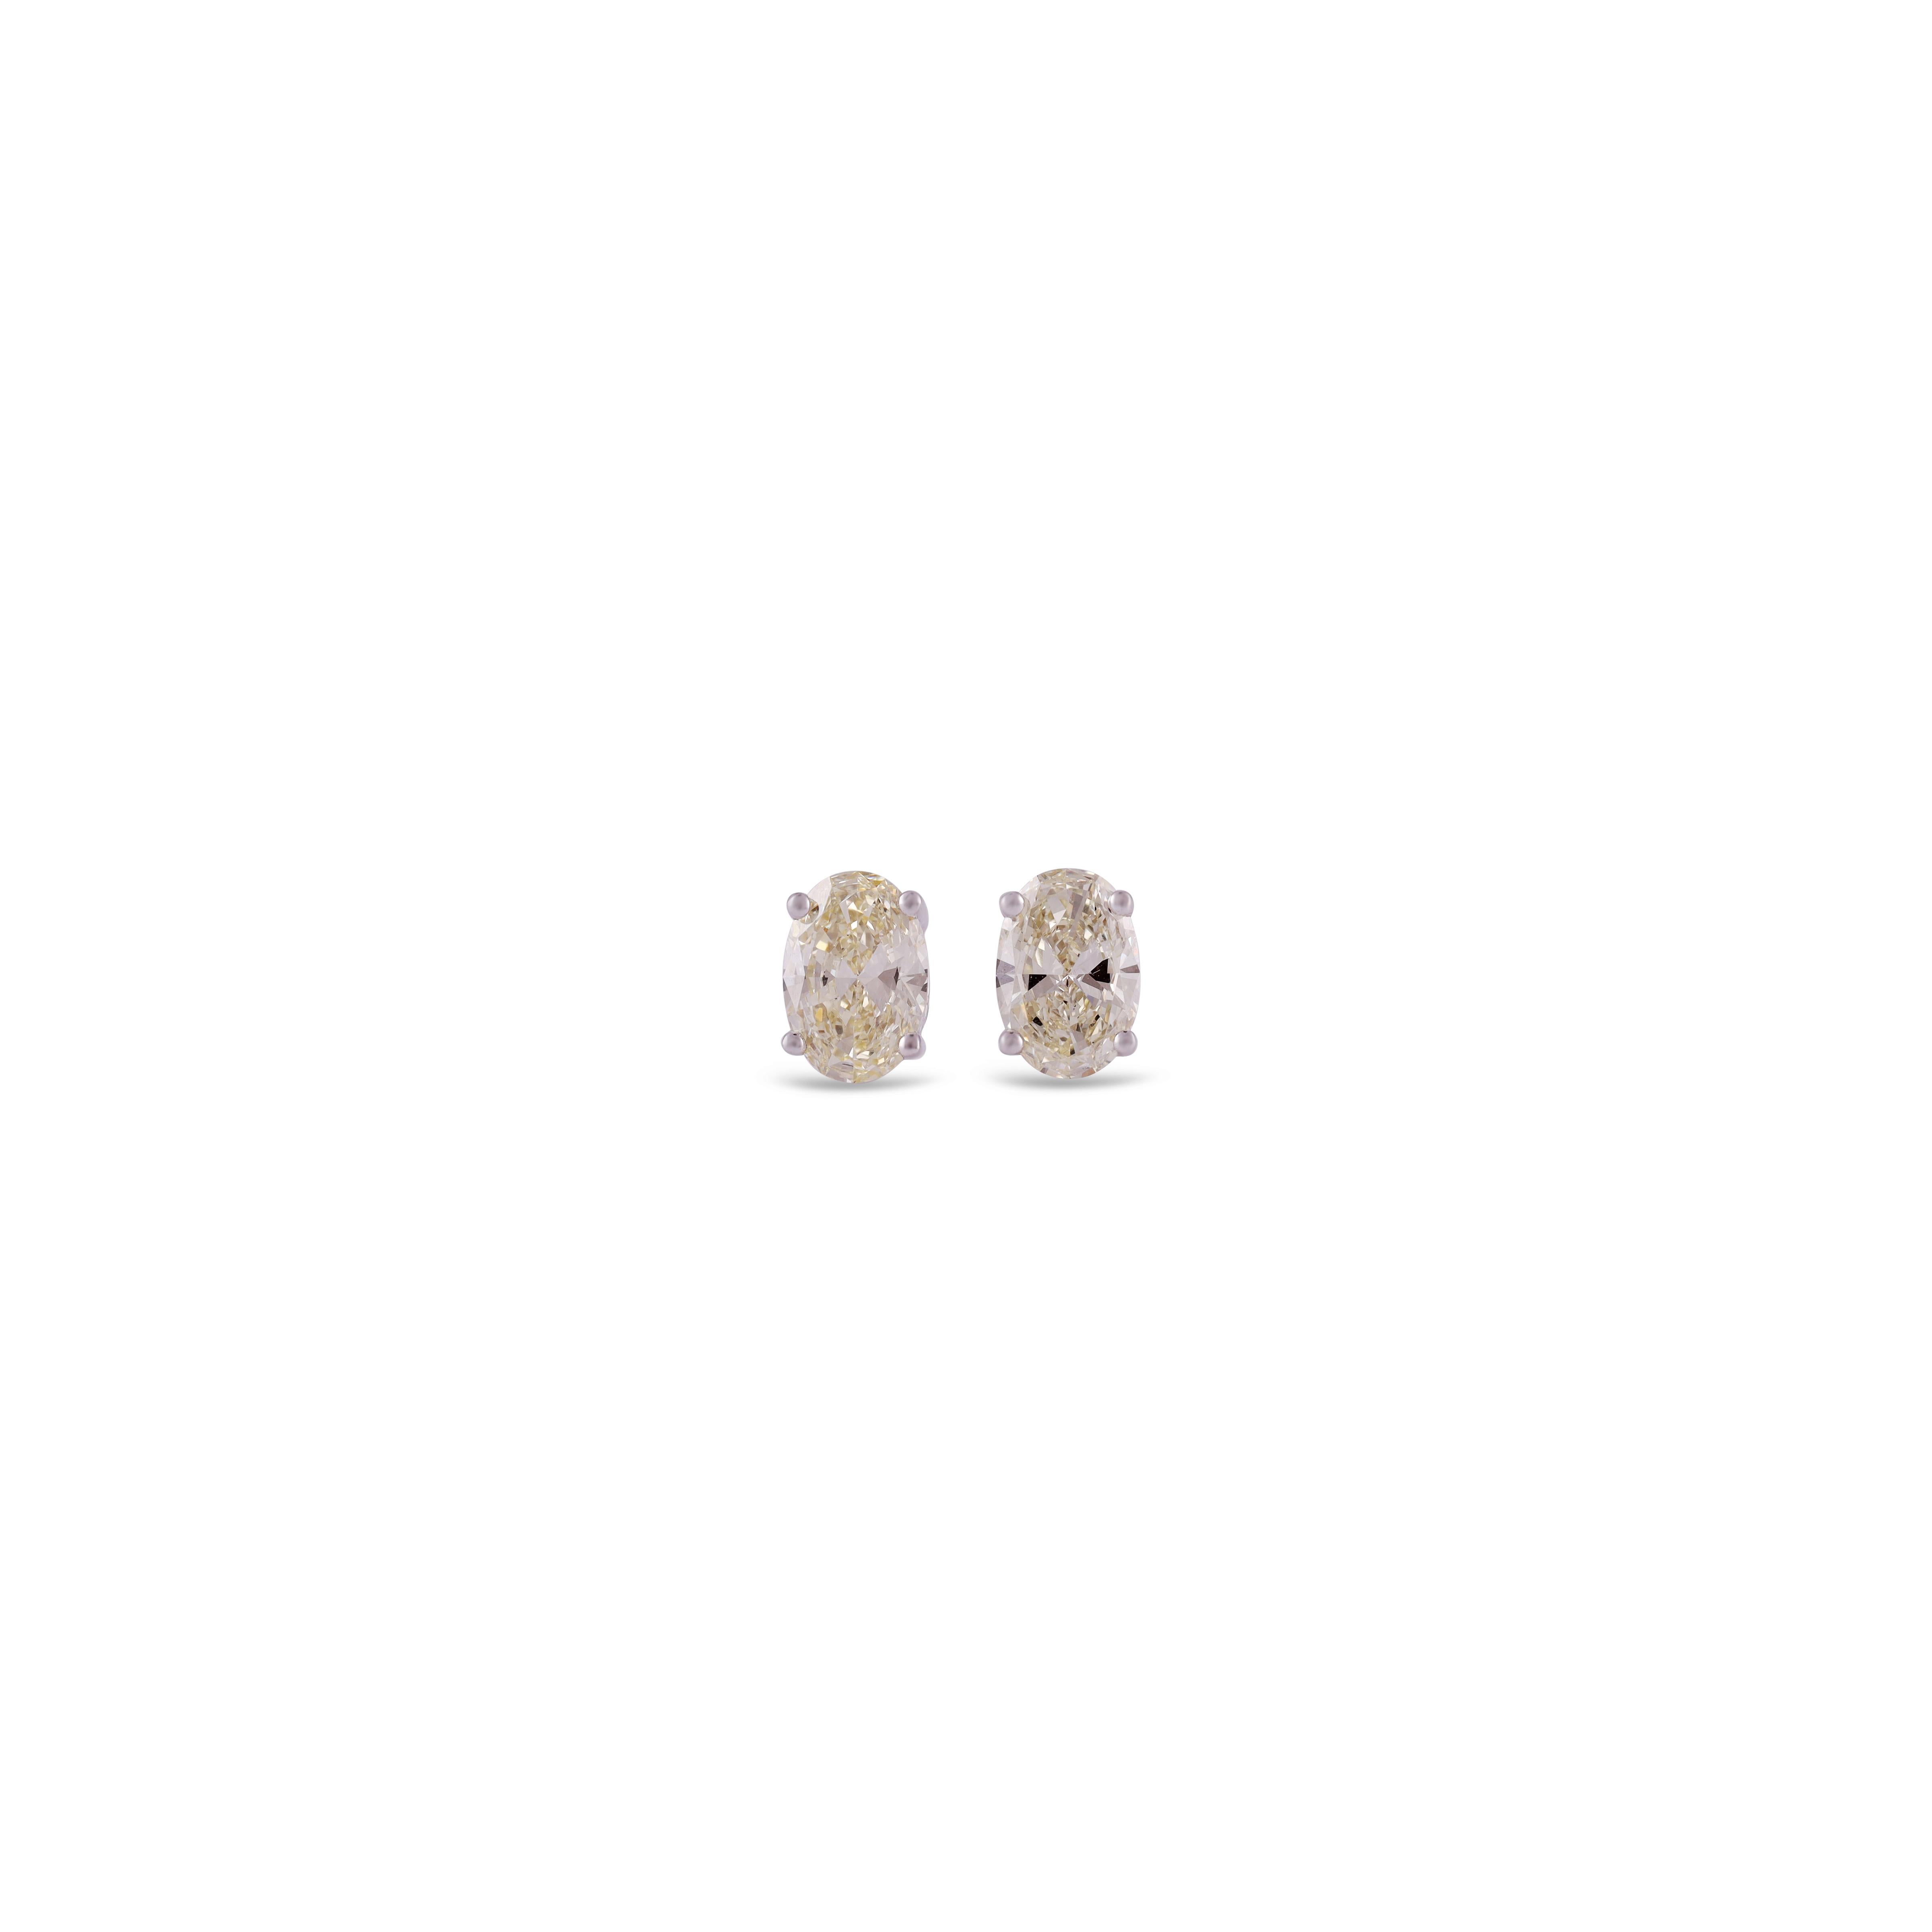 Oval Cut 2.02 Carat Fancy Solitaire Diamond Earring Studded in 18 Karat White Gold For Sale